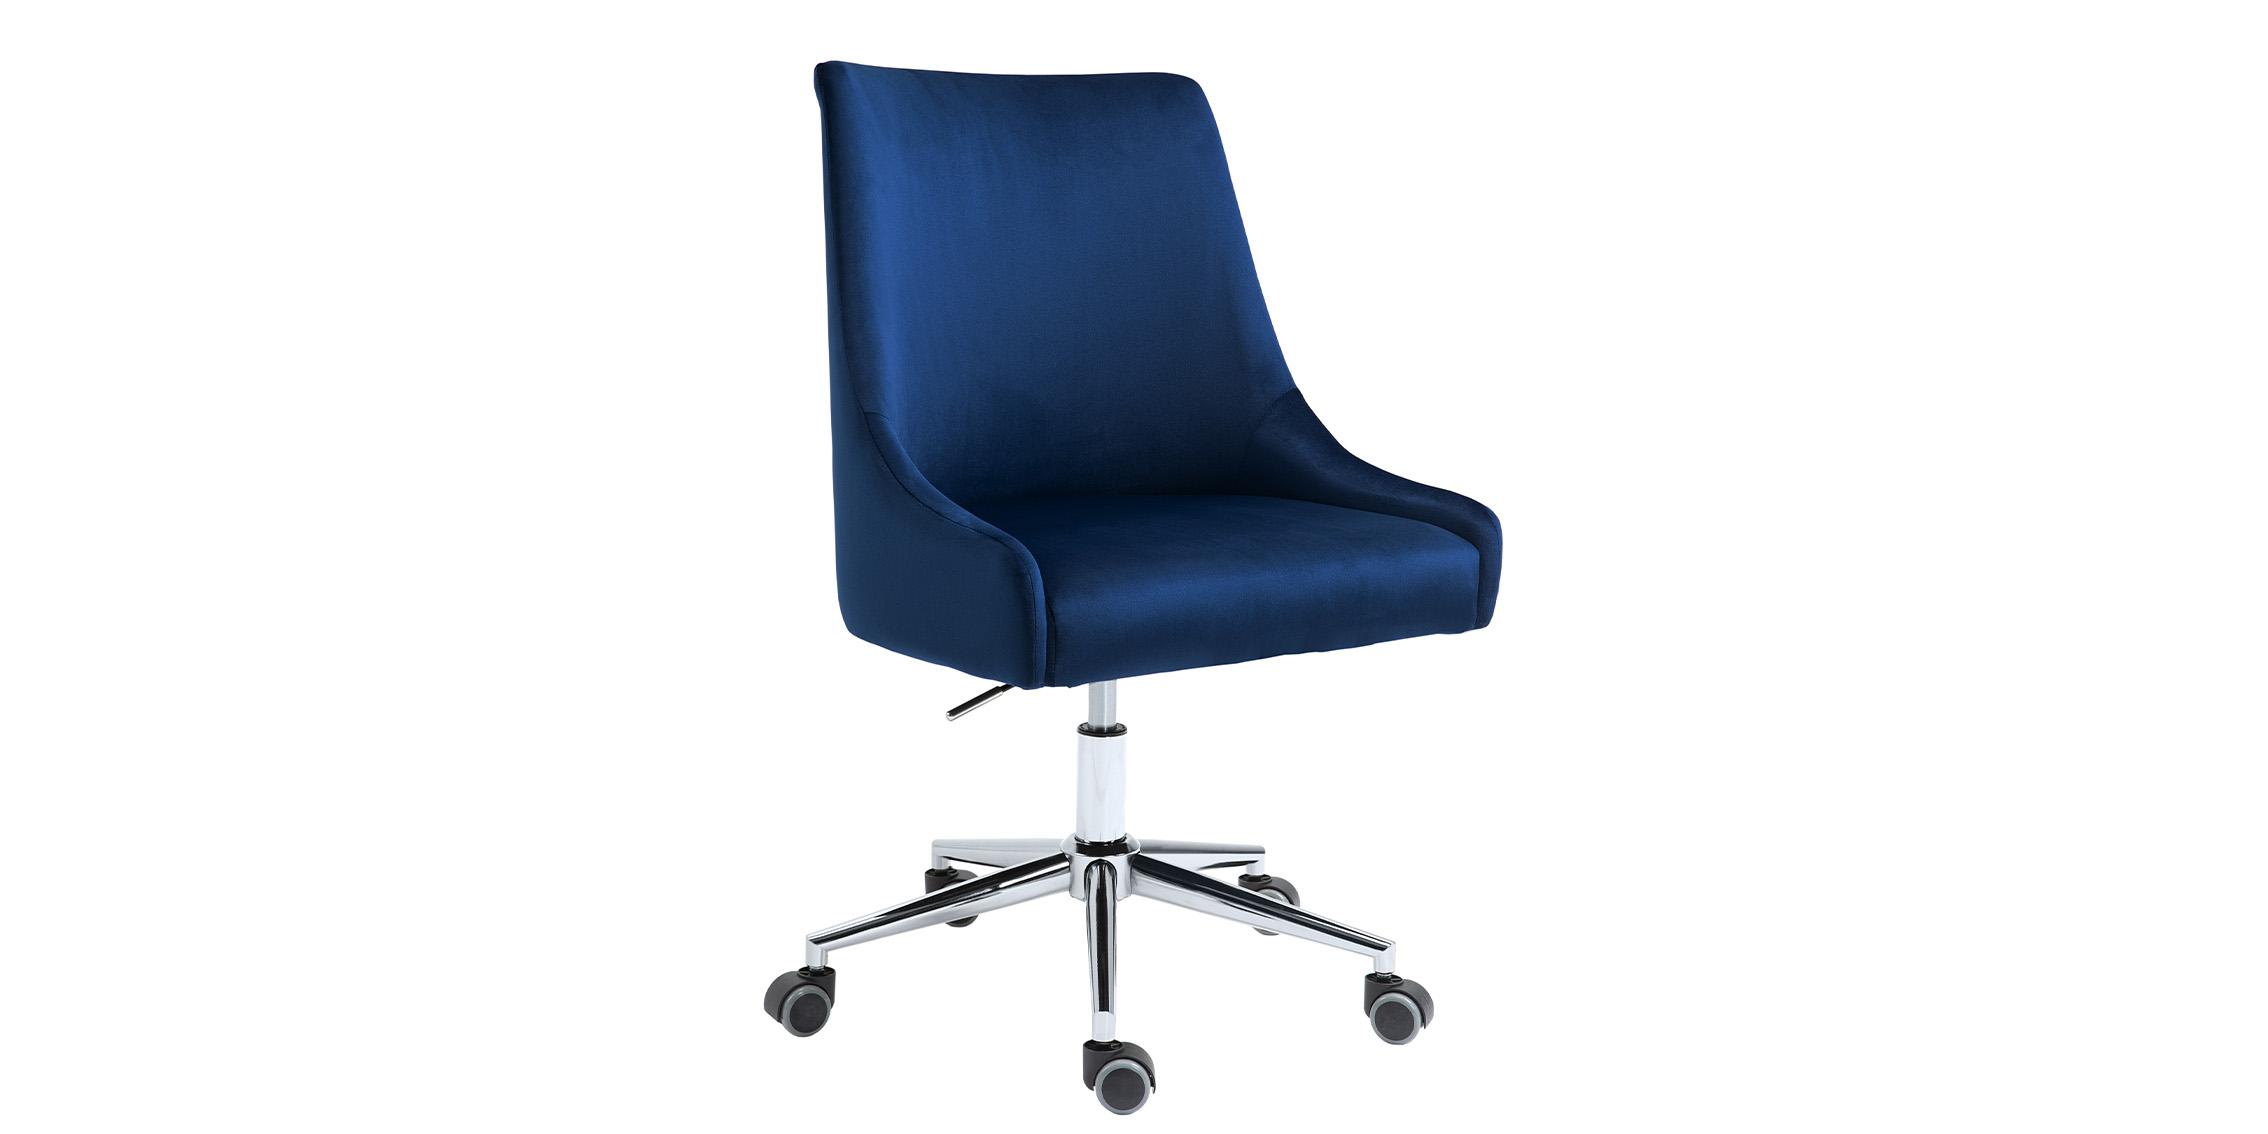 Contemporary, Modern Office Chair KARINA 164Navy 164Navy in Chrome, Navy Fabric